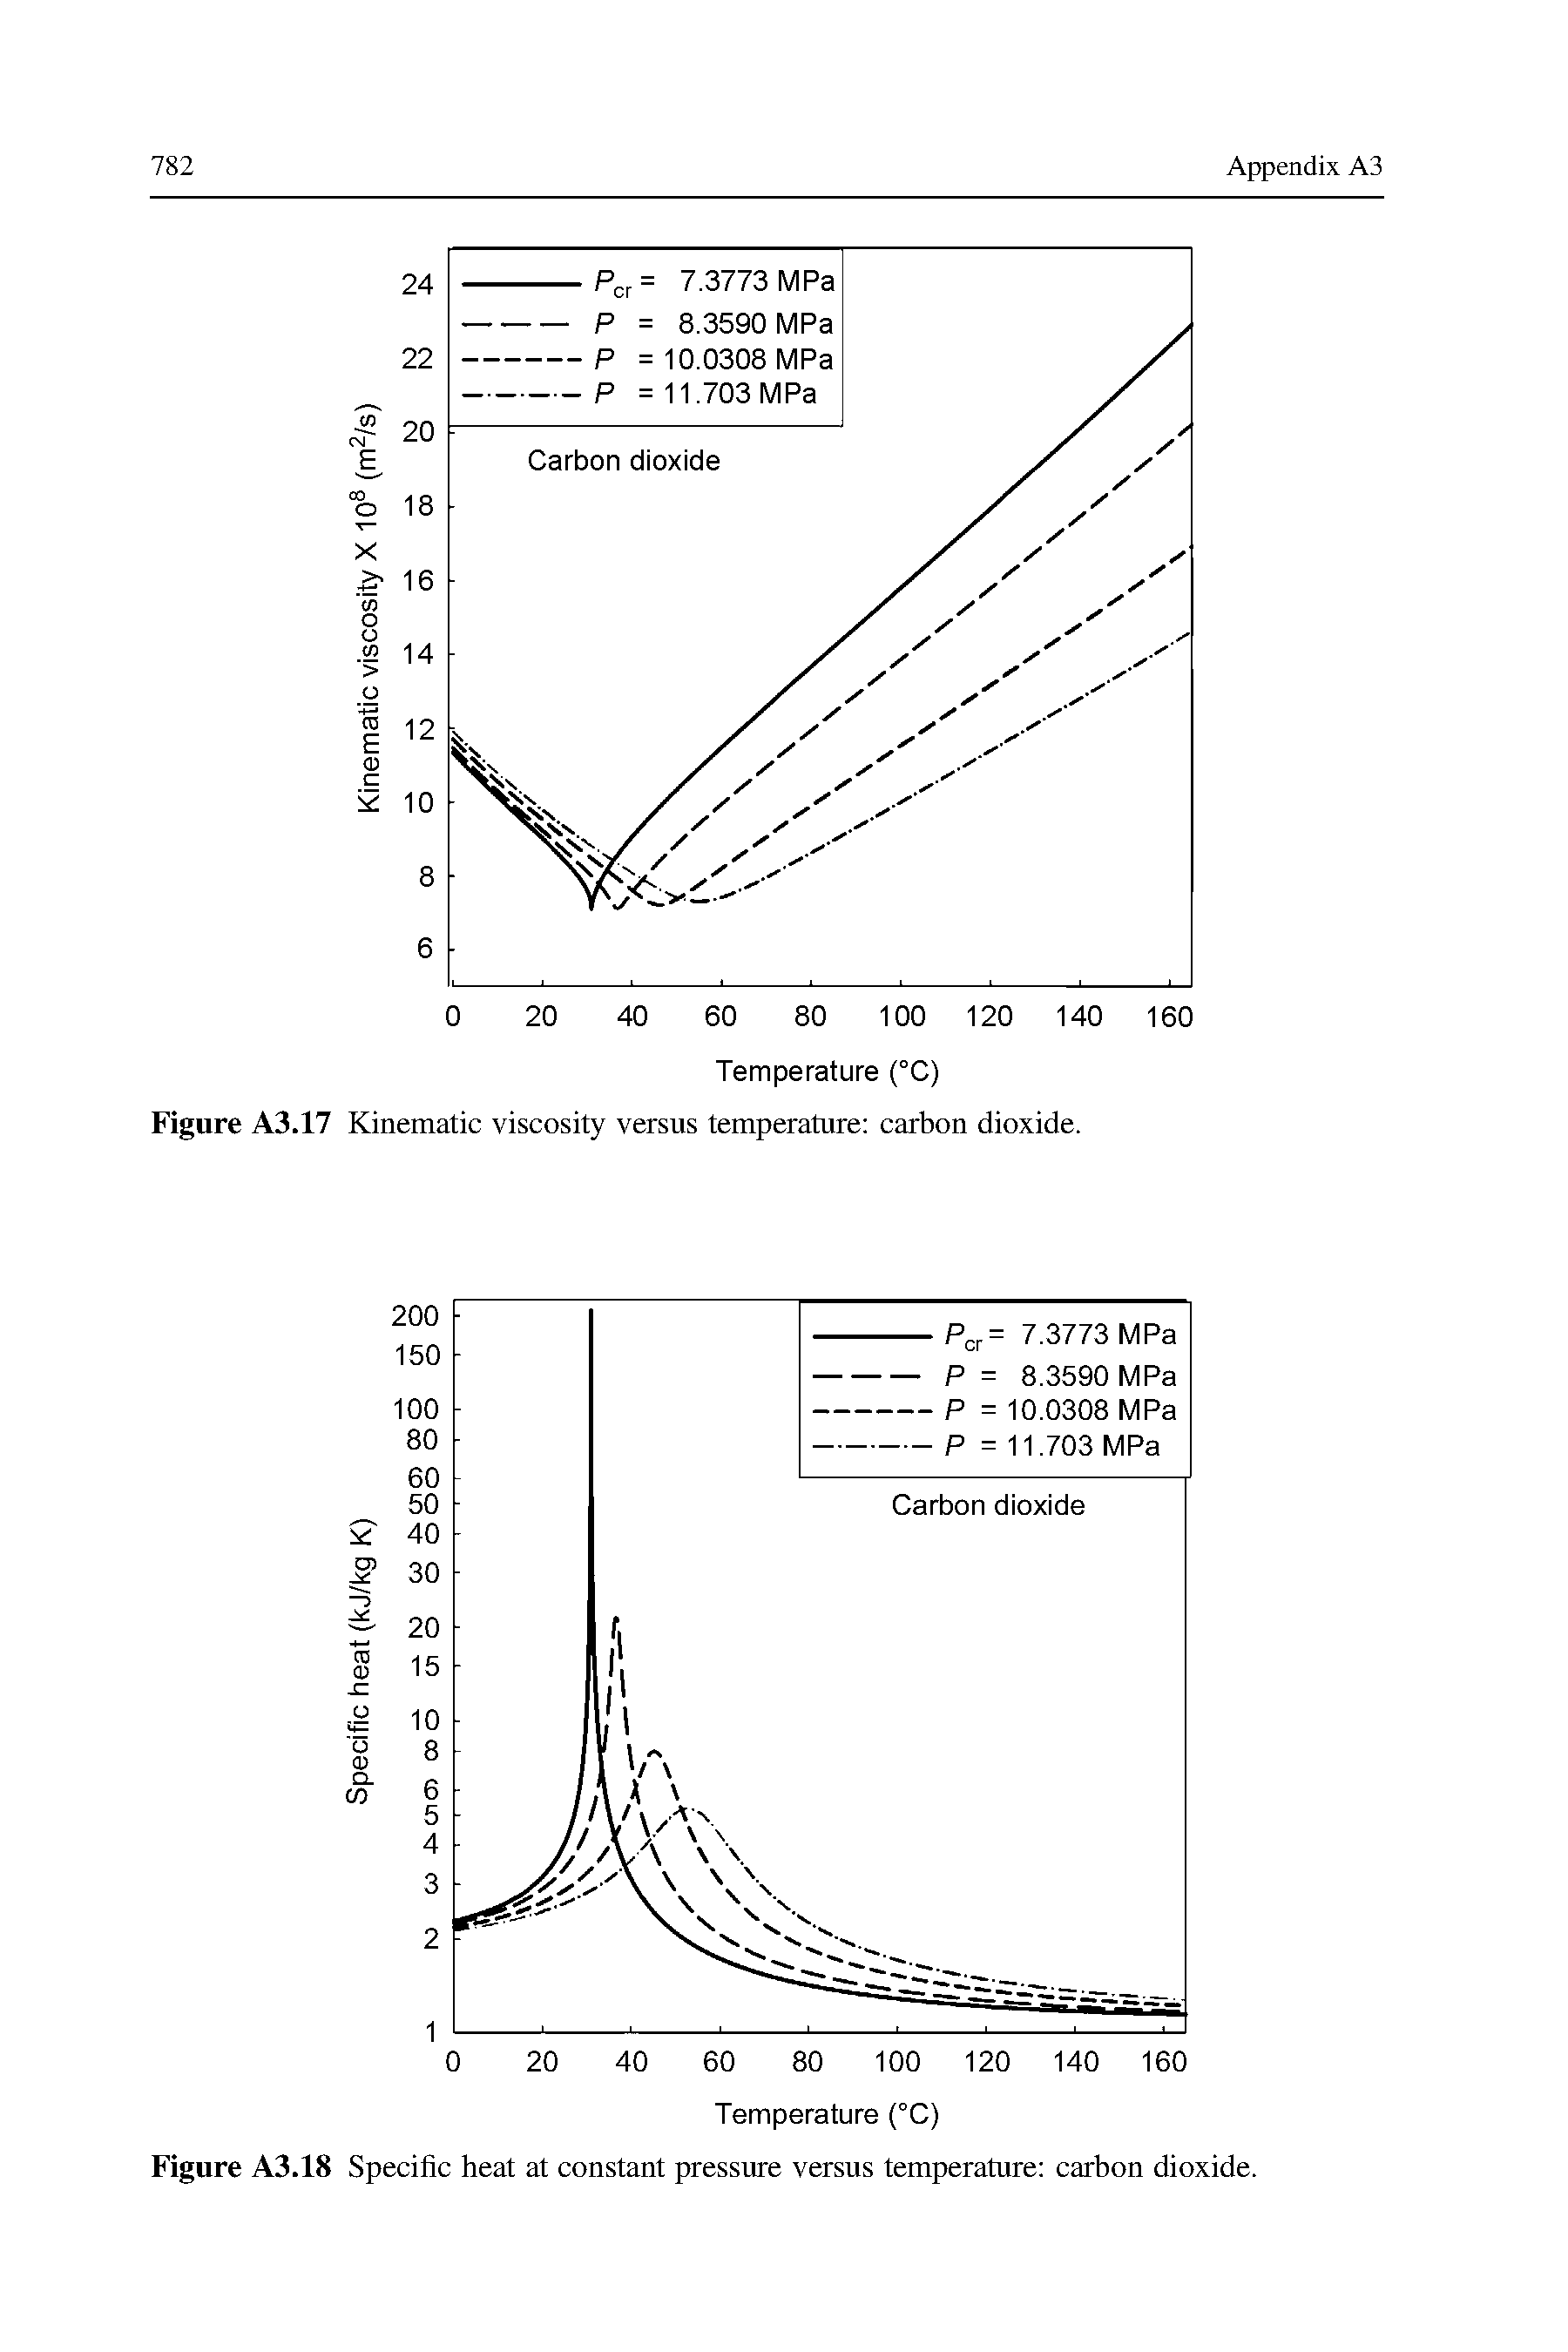 Figure A3.17 Kinematic viscosity versus temperature carbon dioxide.